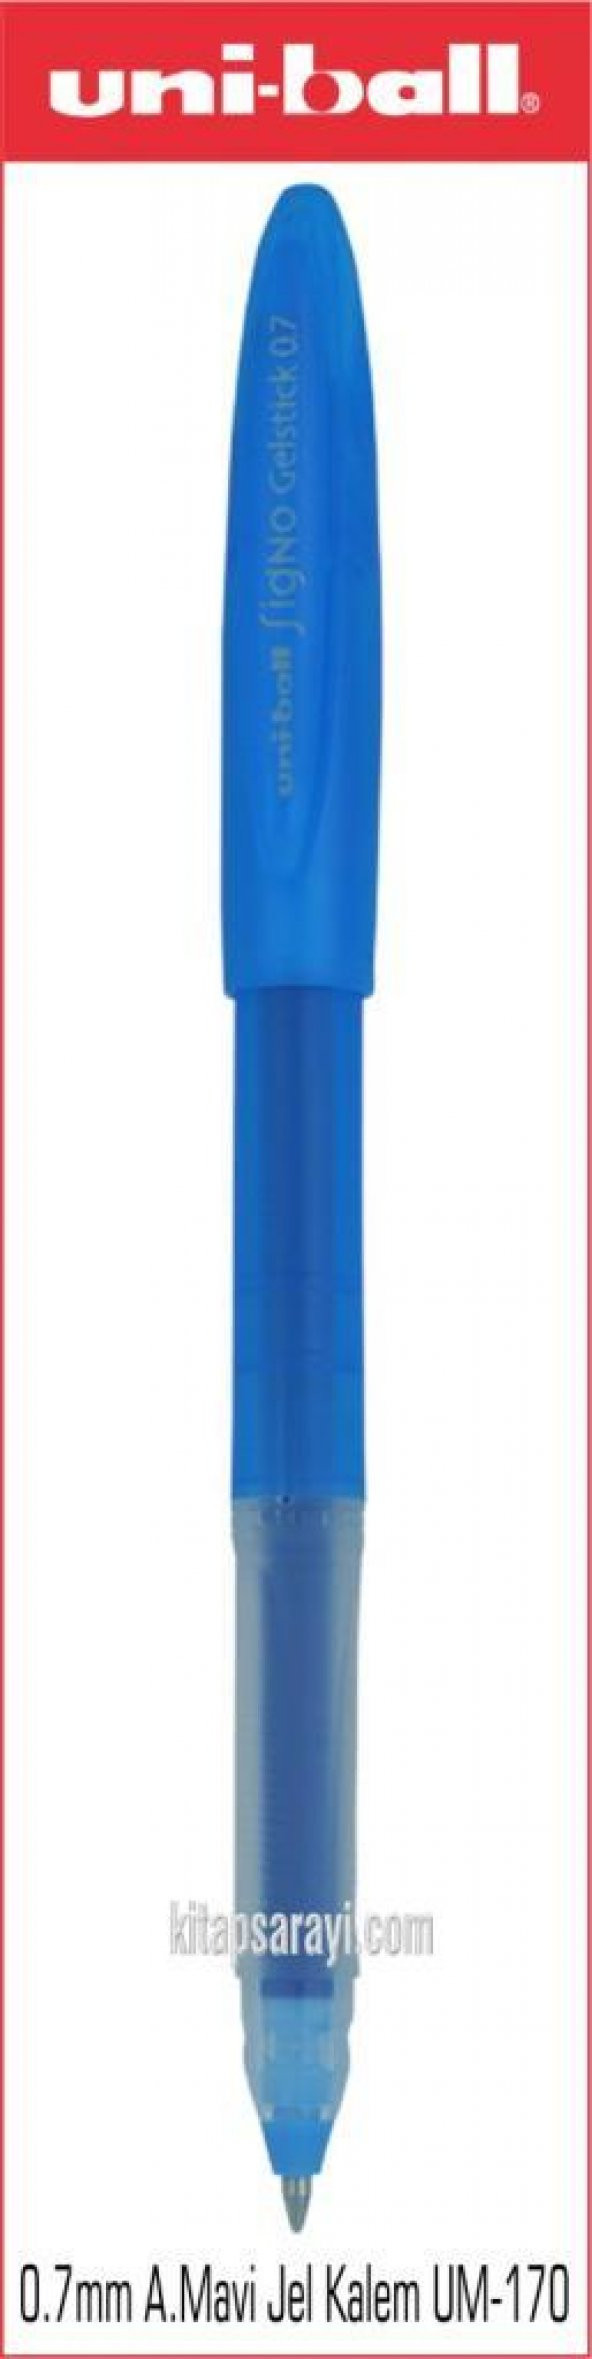 Uniball Signo GELSTICK 0.7 mm A. Mavi Jel Kalem UM-170